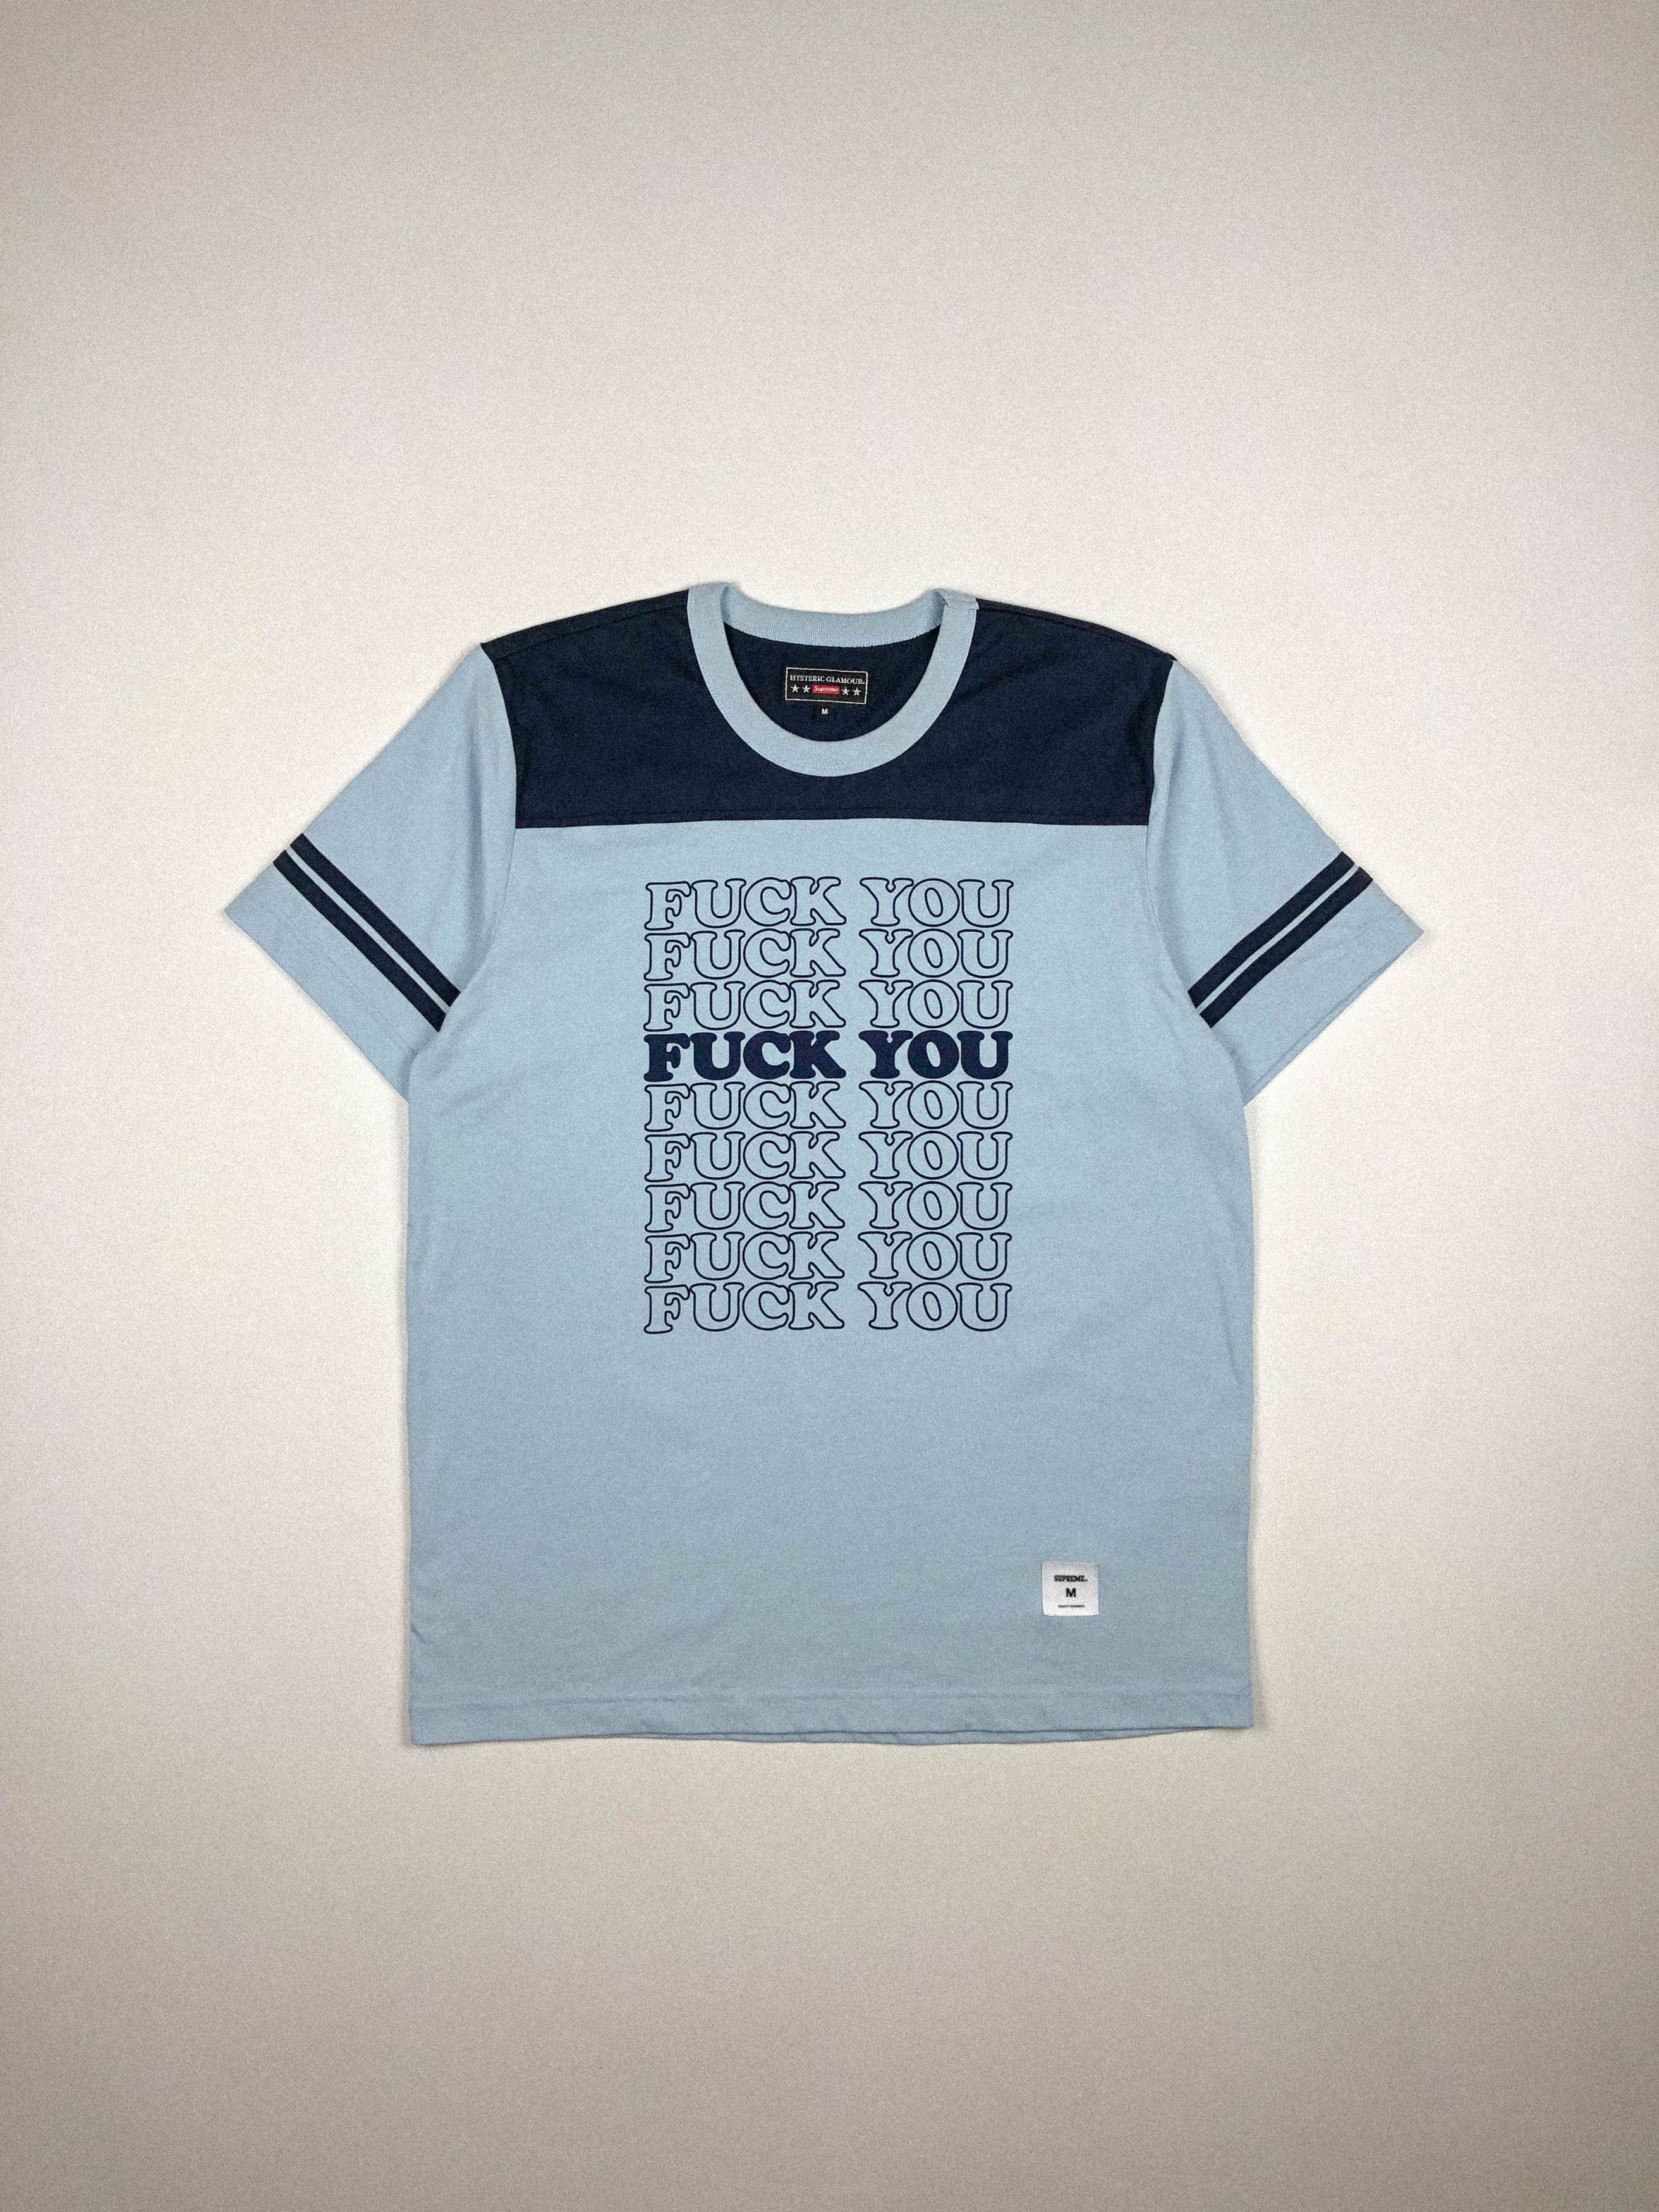 Supreme Supreme x Hysteric Glamour Fuck Football T-Shirt | Grailed